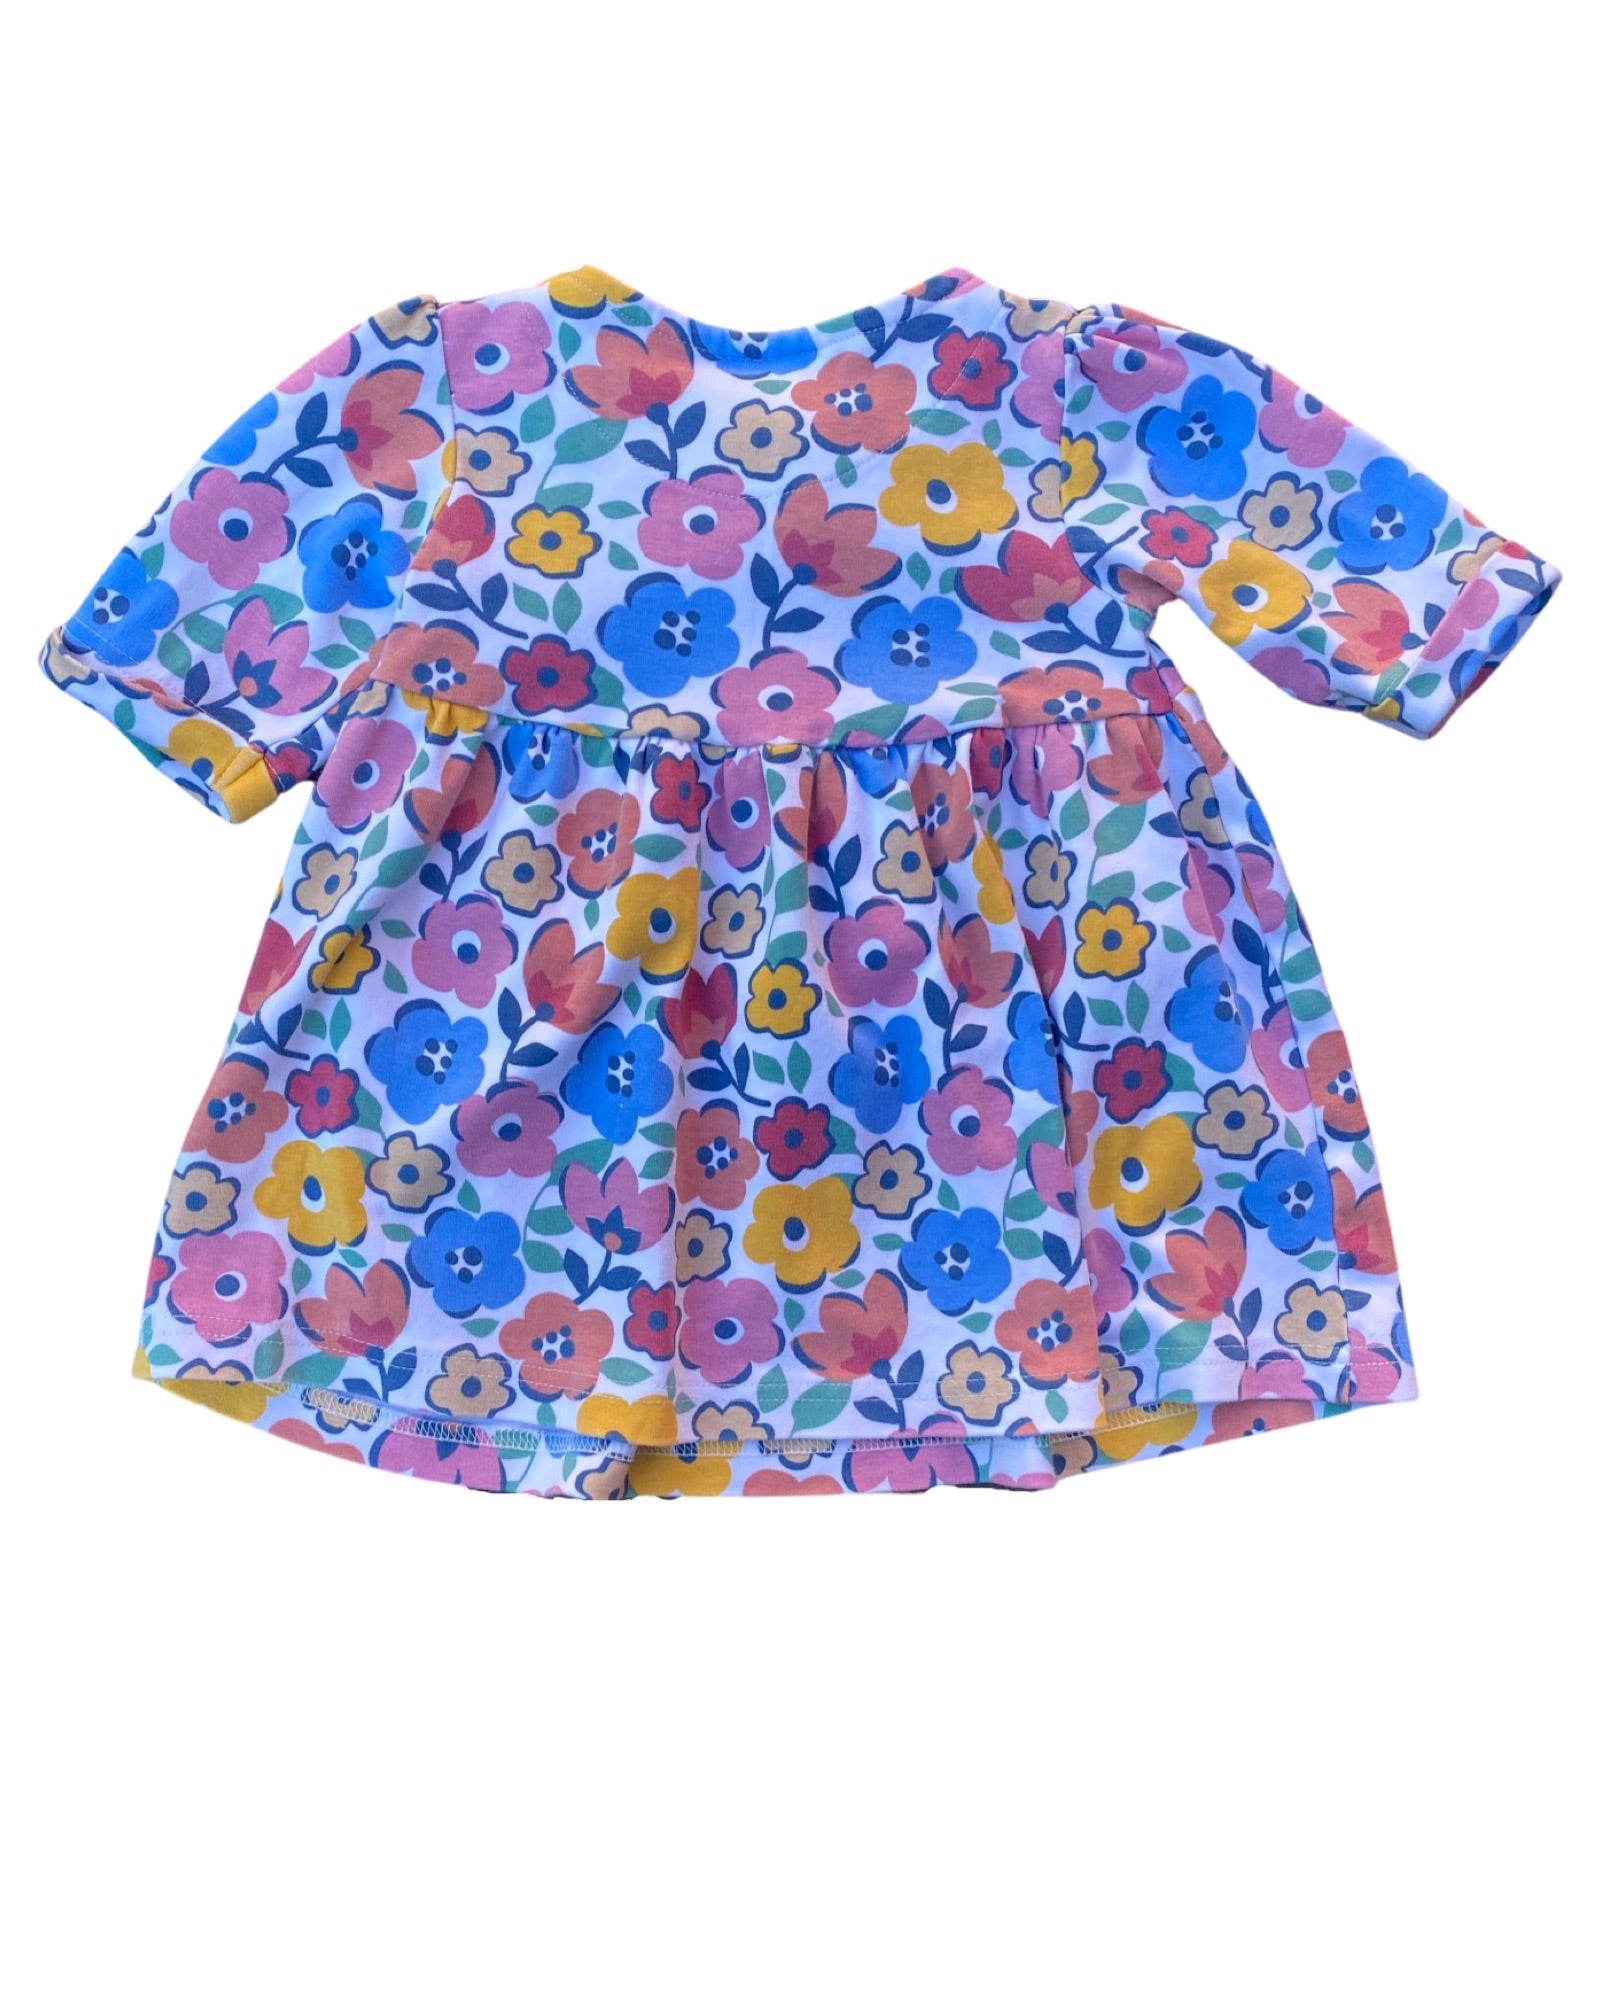 Jojo Maman Bebe floral print jersey dress (12-18mths)